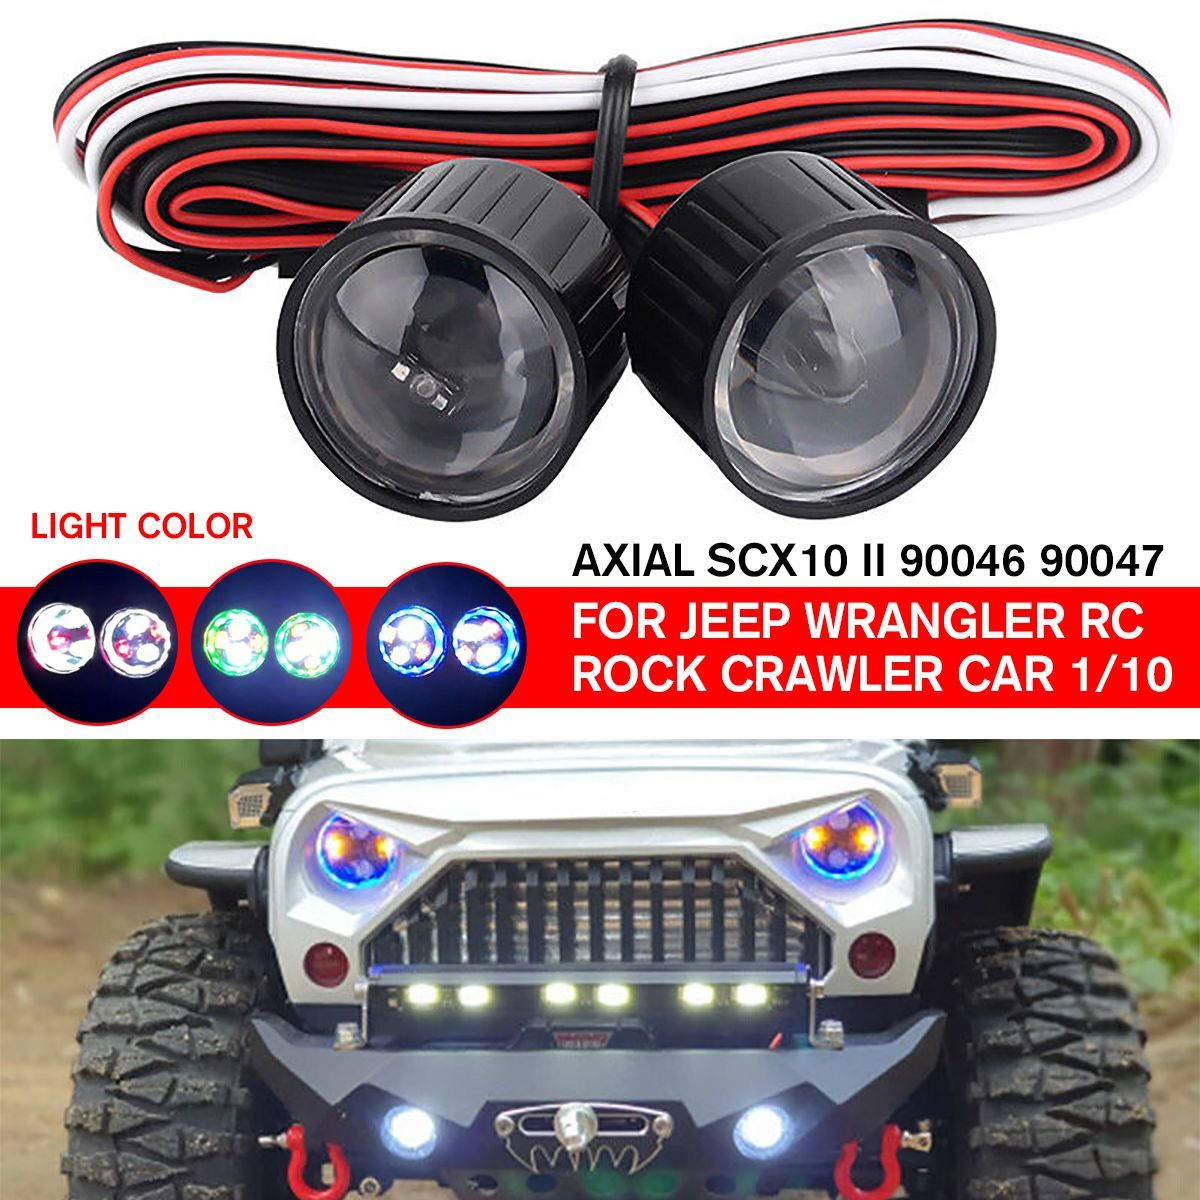 Car-LED-Headlights-for-Jeep-Wrangler-Axial-SCX10-90046-90047-110-RC-Rock-Crawler-1624580